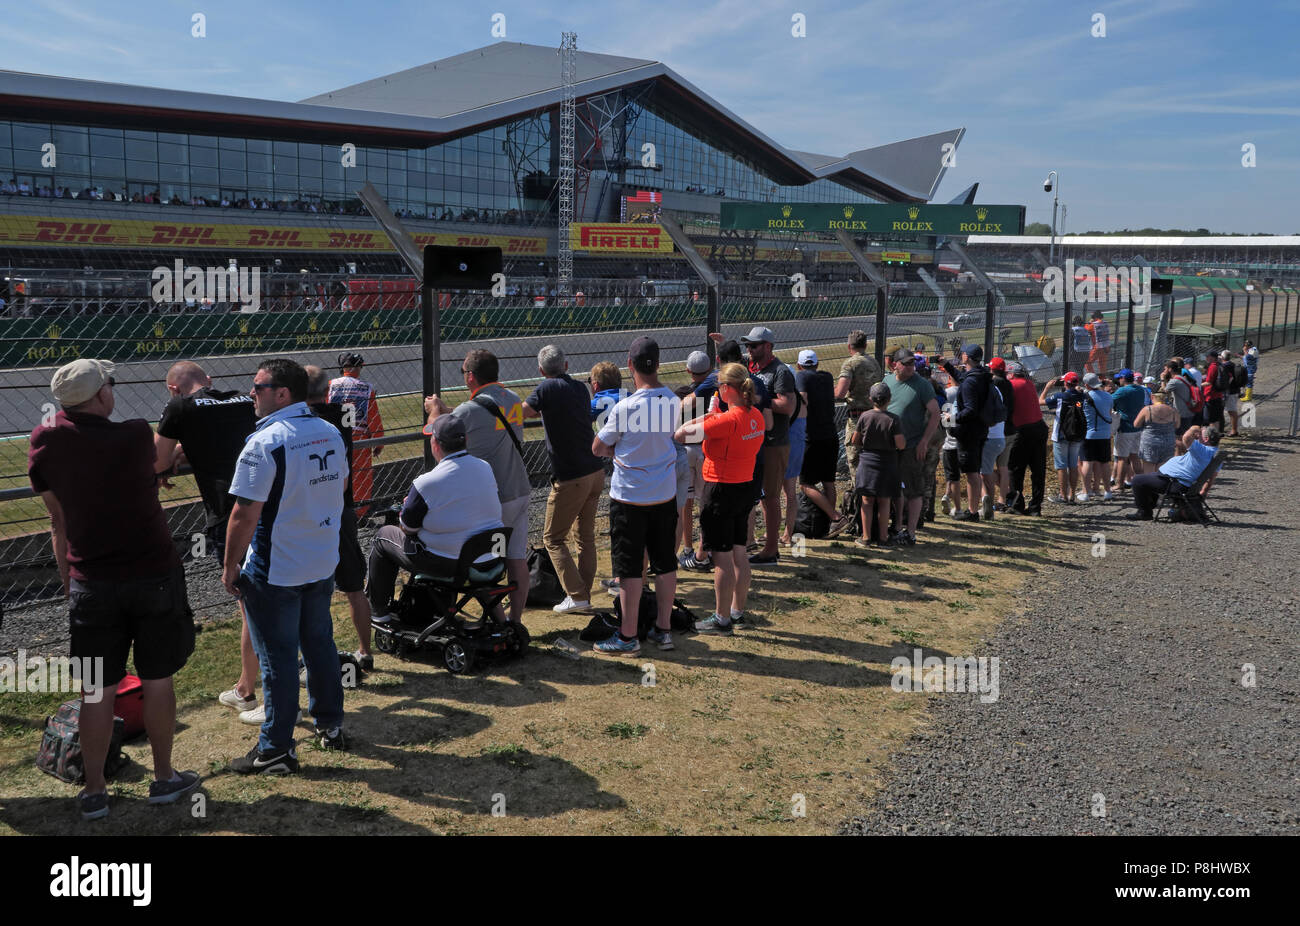 Silverstone Formula One Circuit and general admission spectators, Northamptonshire, West Midlands, England, UK Stock Photo